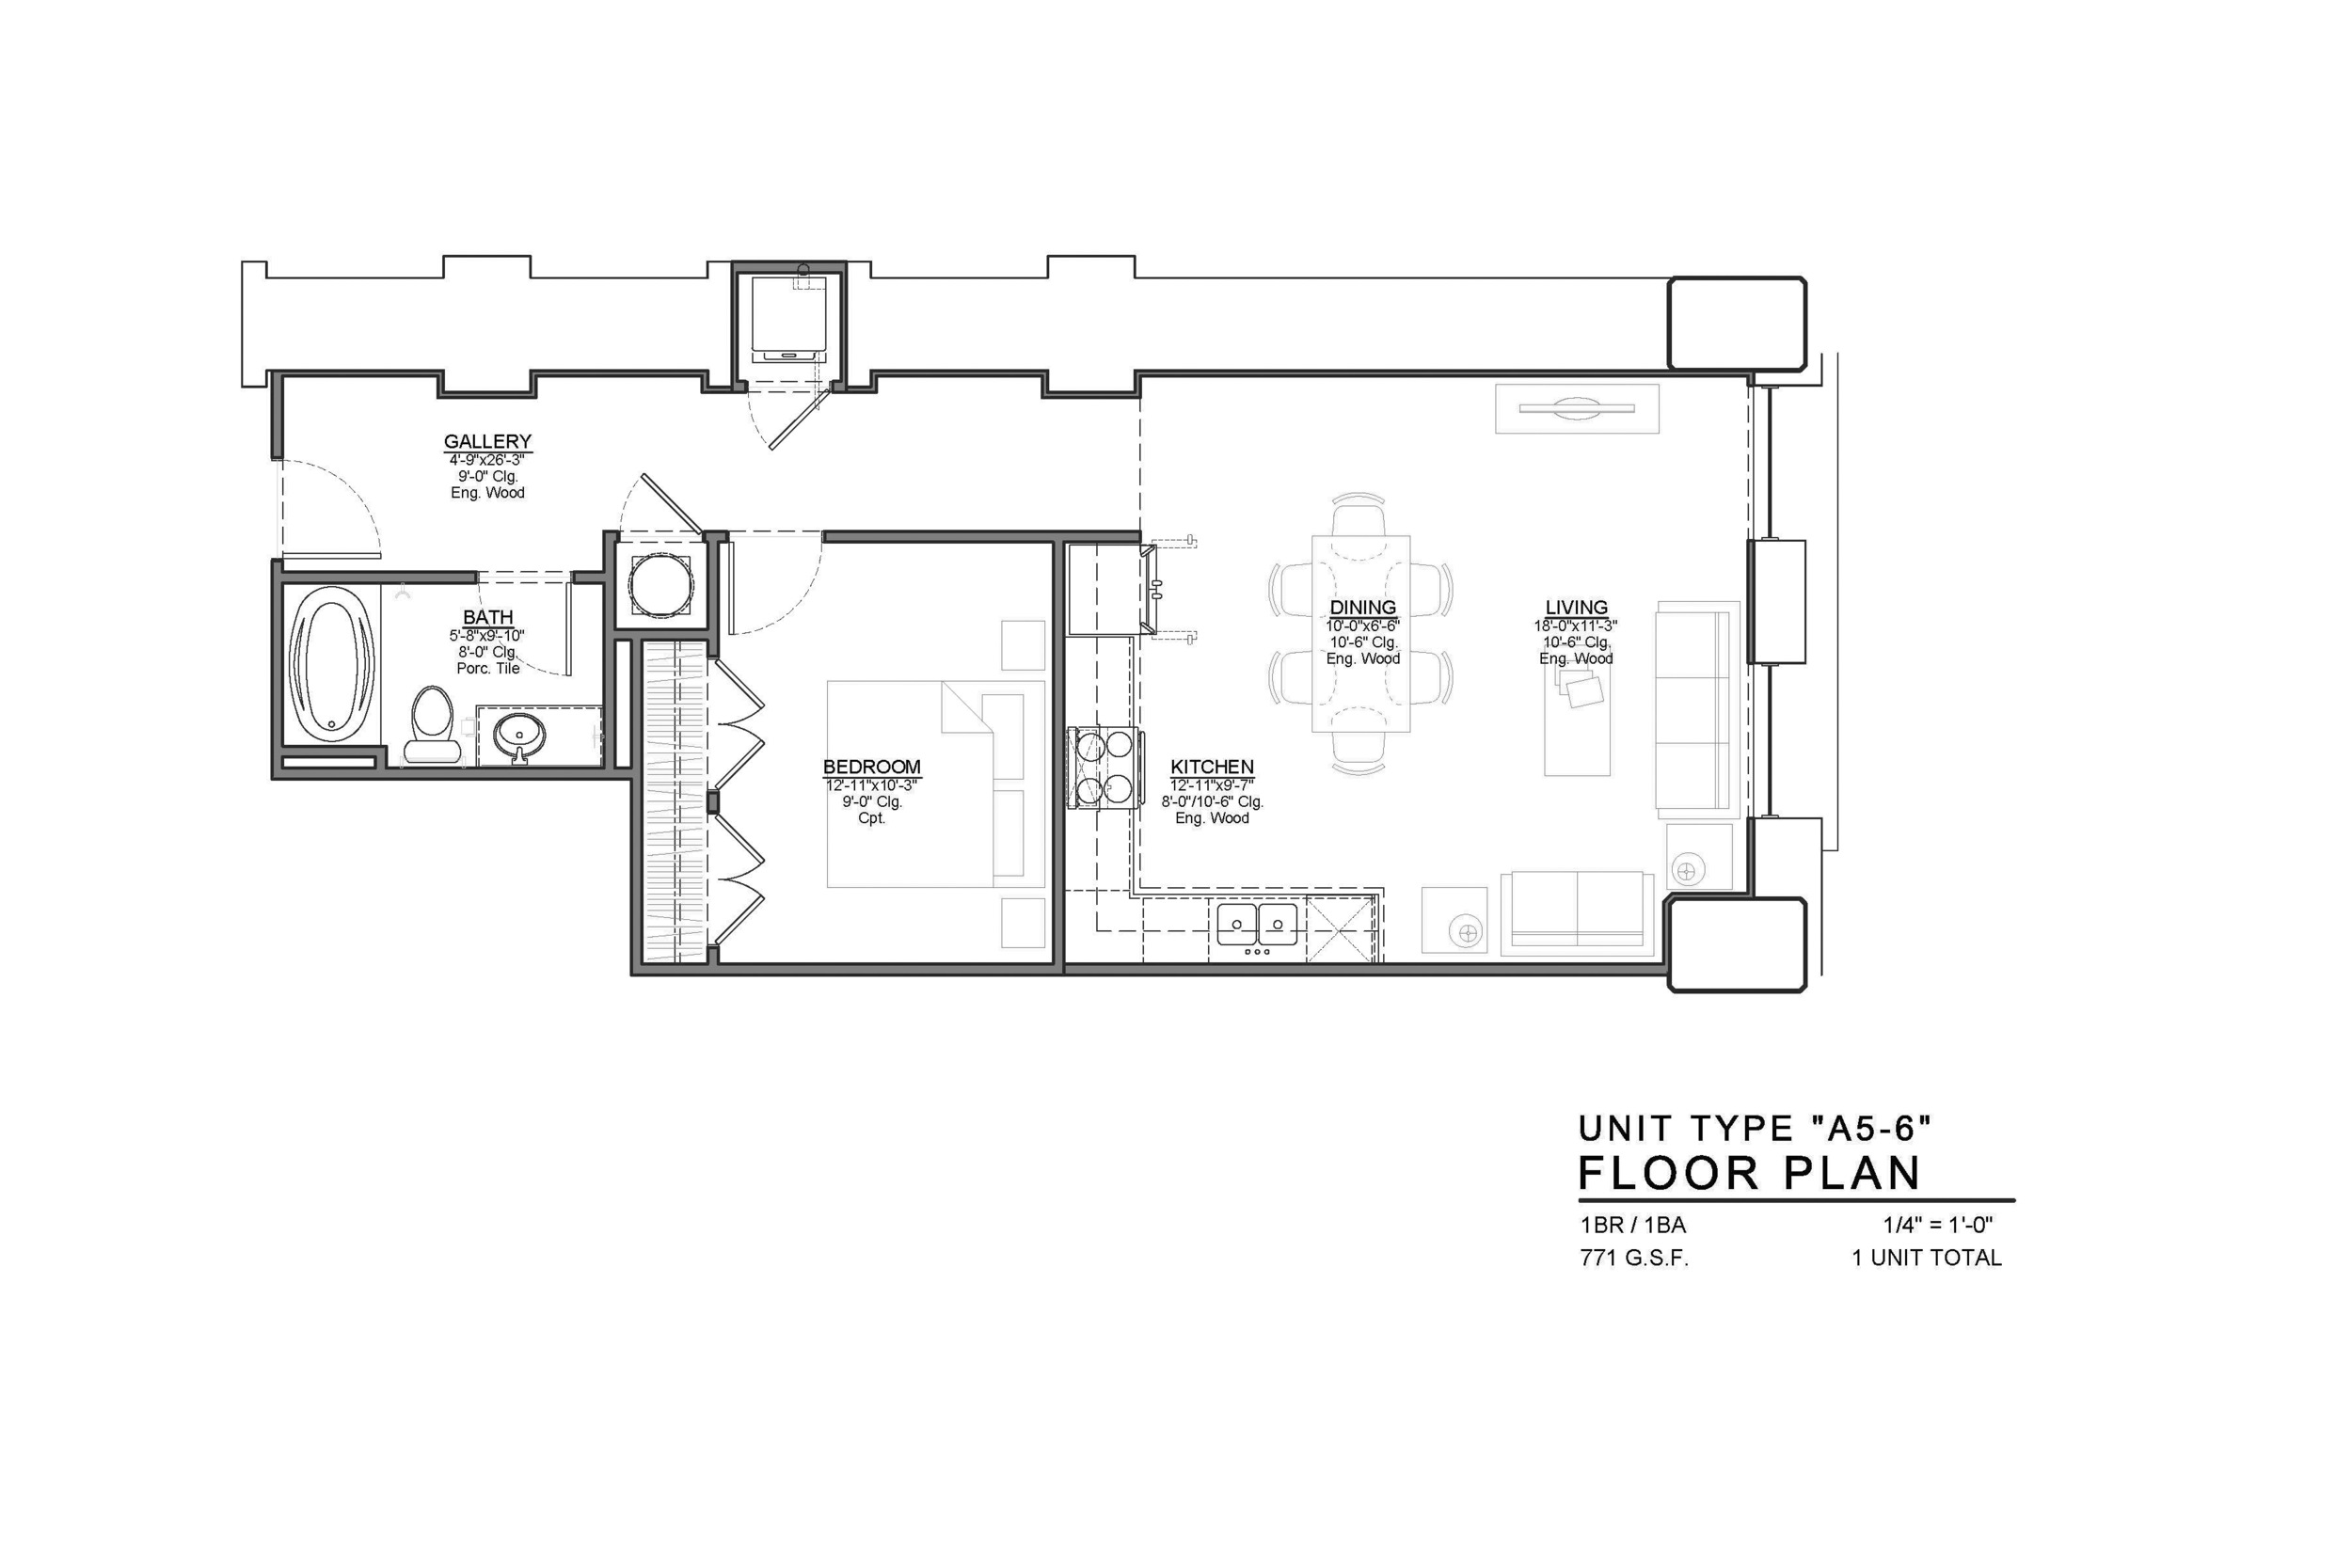 A5-6 FLOOR PLAN: 1 BEDROOM / 1 BATH